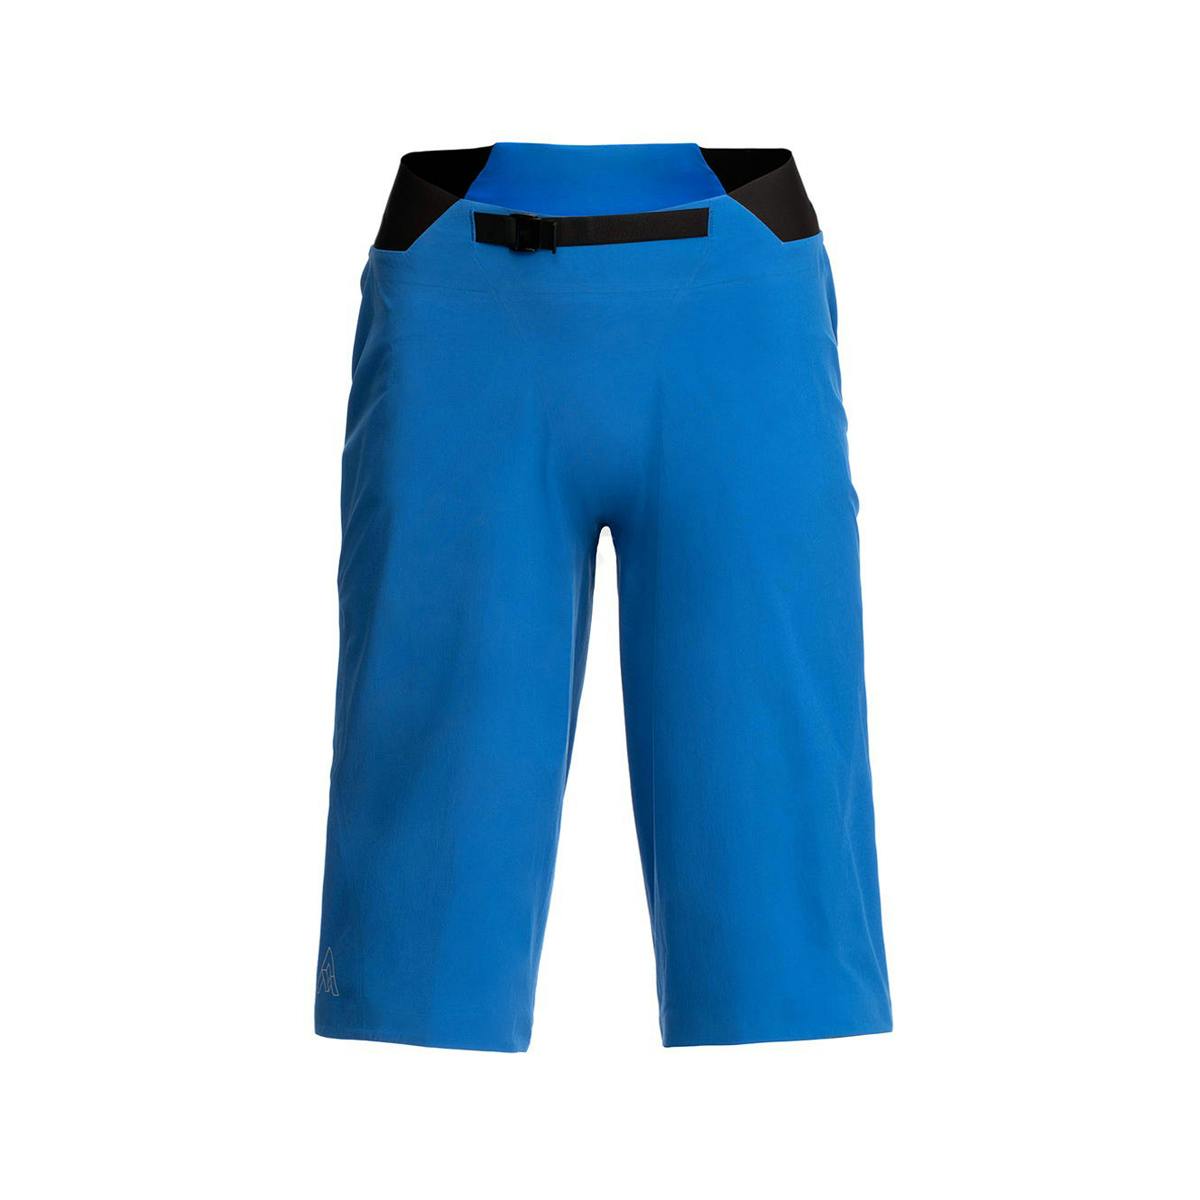 7Mesh Slab Shorts - Super Blue - Large